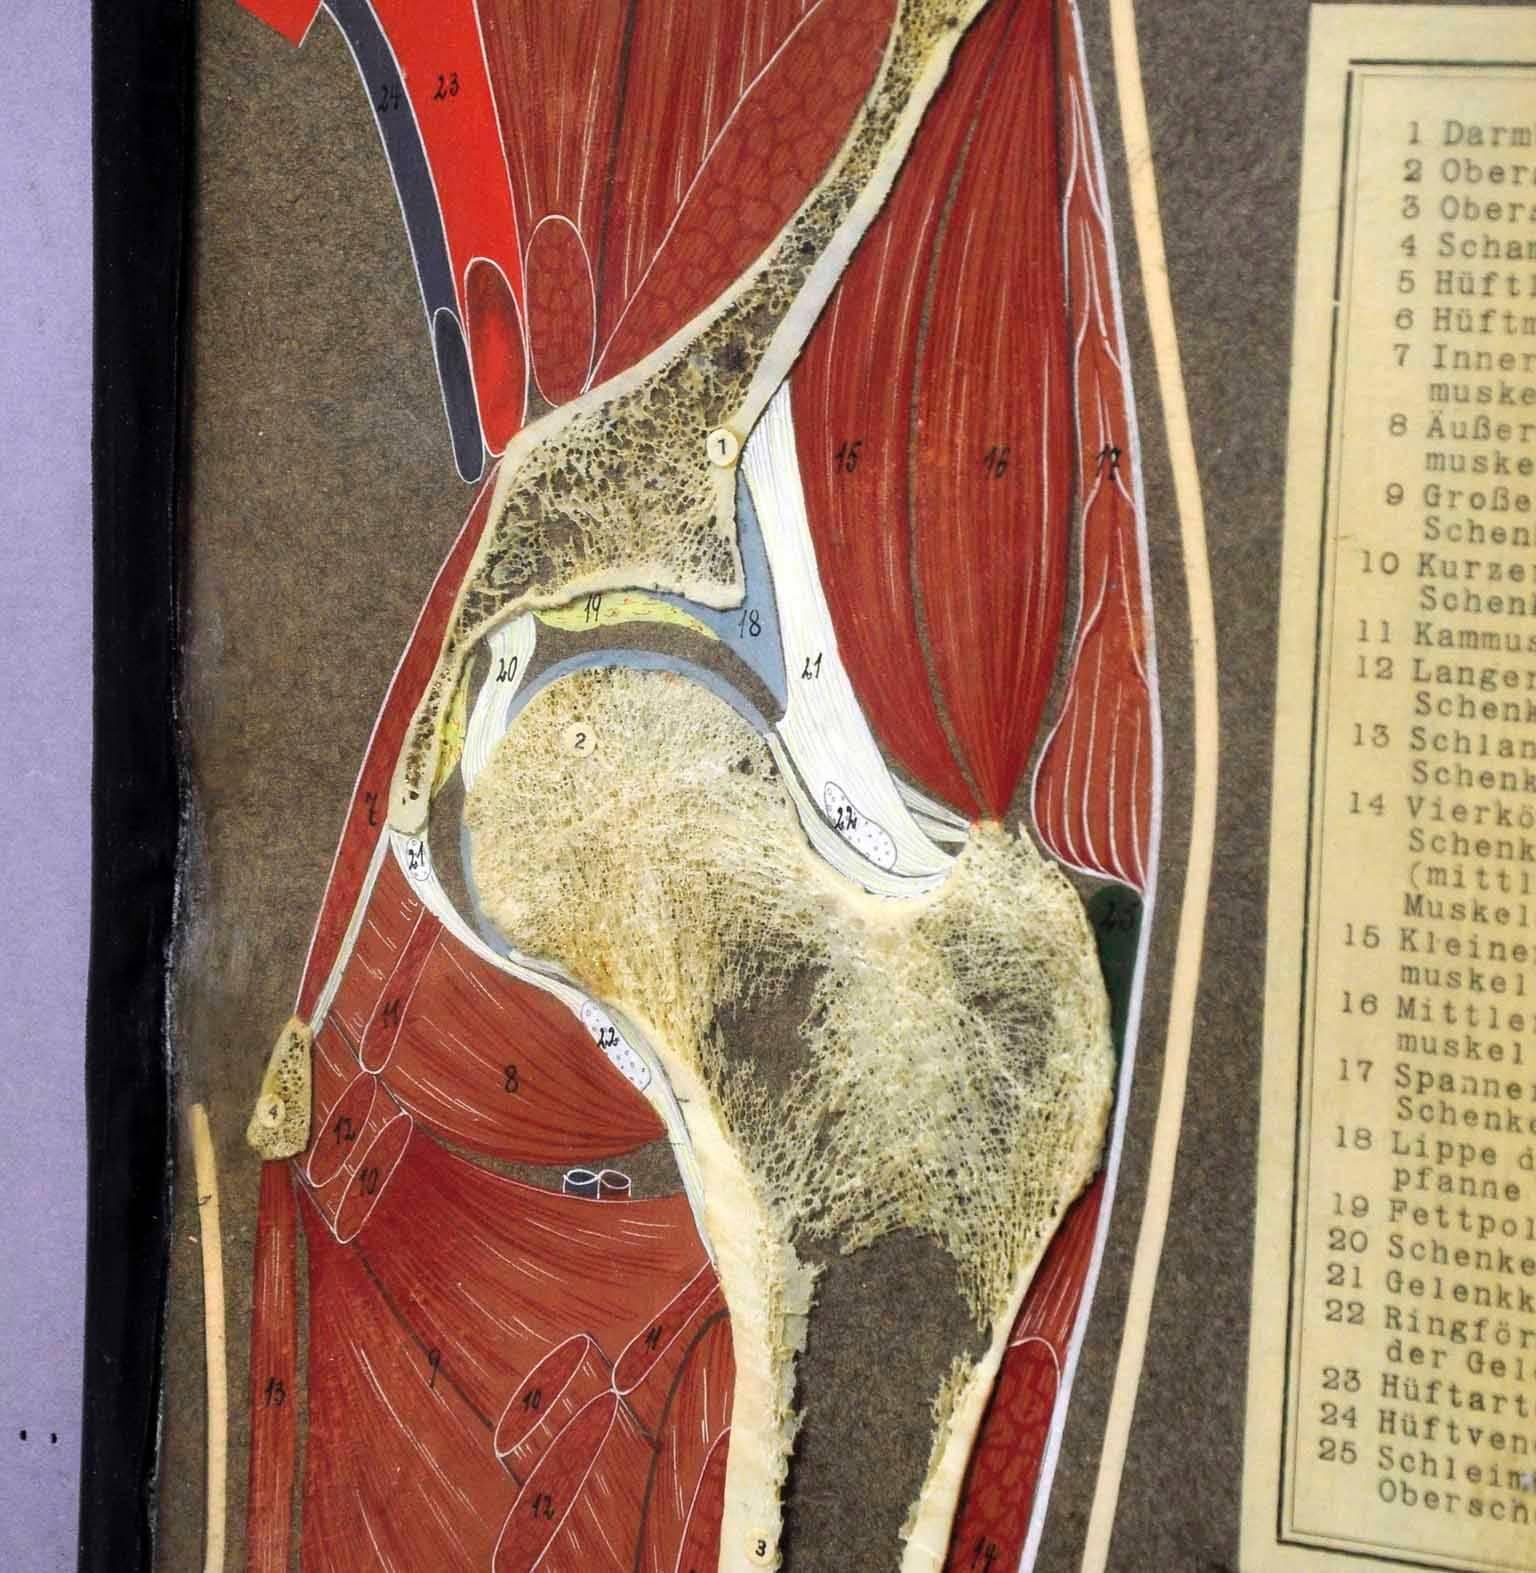 An old demonstration model of a longitudinal bone cut of a human hip joint. Published by Hermann Eppler, Lehrmittelanstalt Rudolstadt. Used as teaching material in German schools, circa 1900.